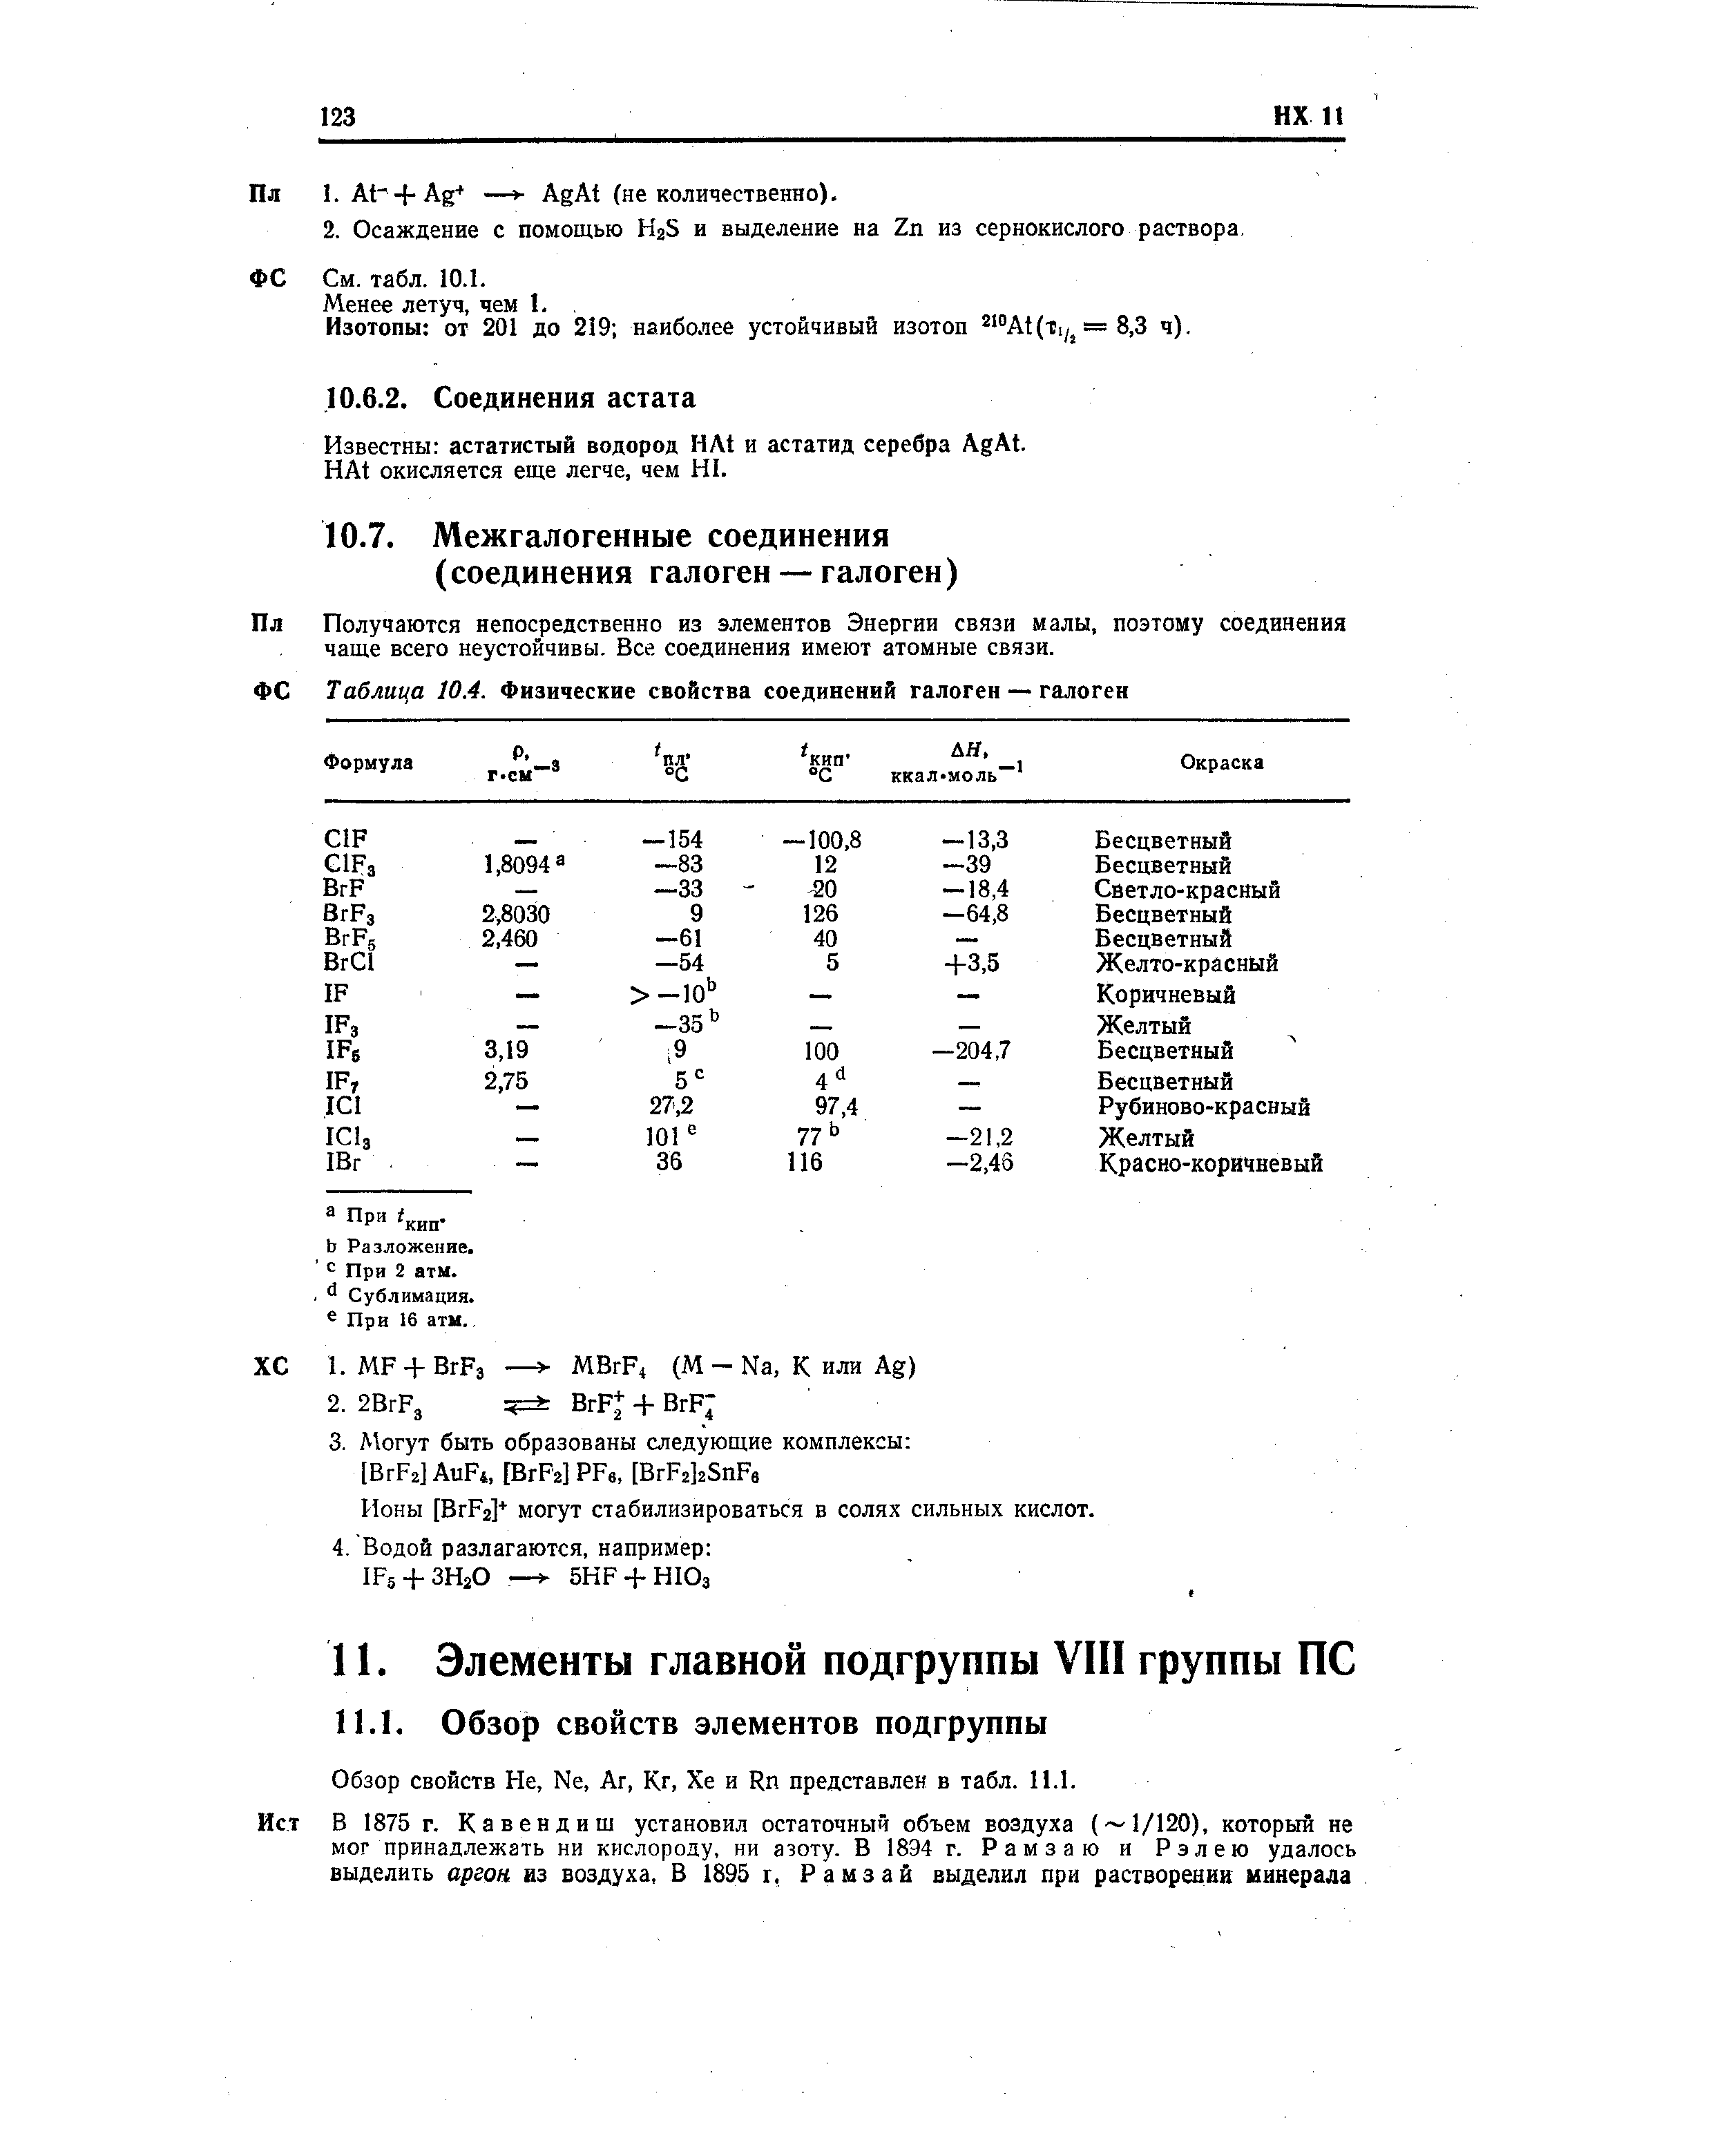 Обзор свойств Не, Ne, Аг, Кг, Хе и Rn представлен в табл. 11.1.